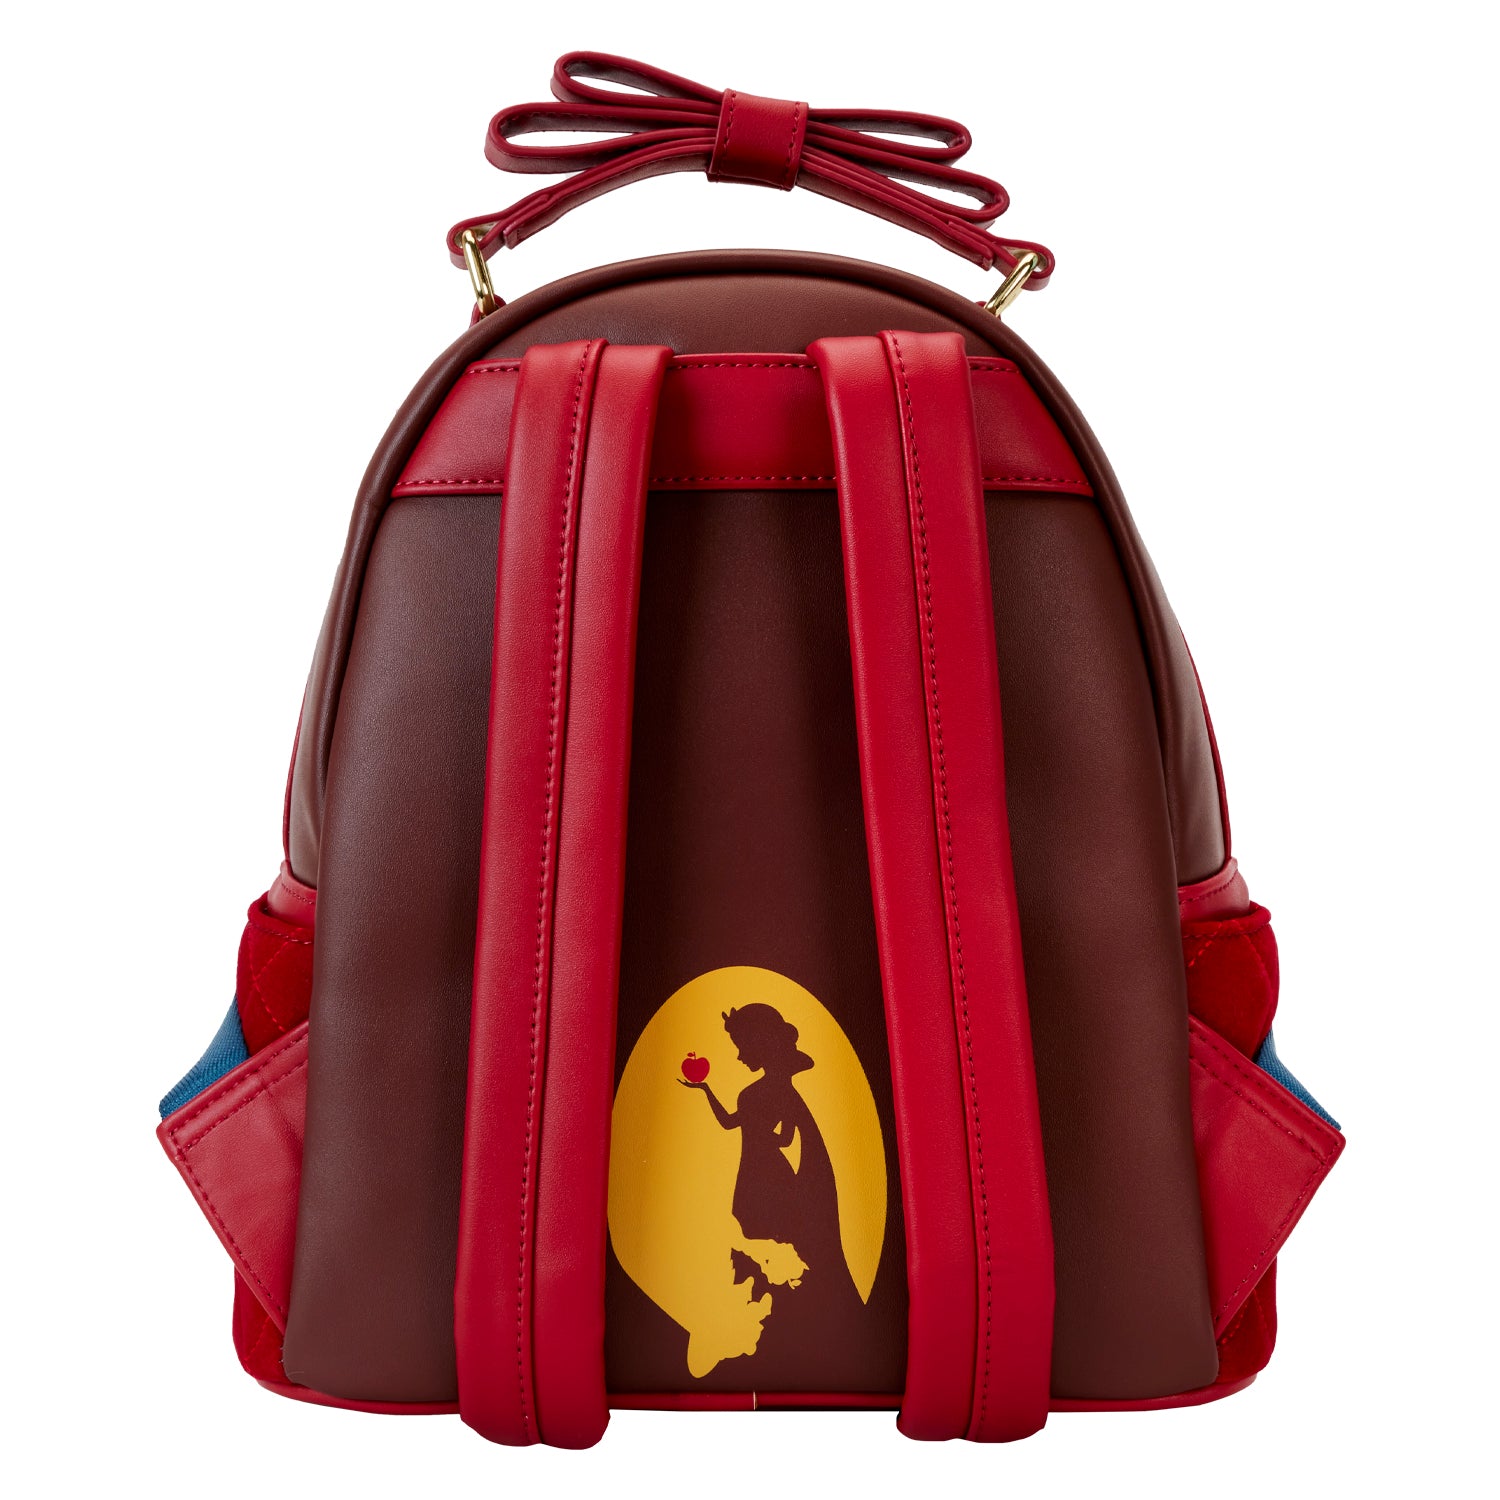 Loungefly x Disney Snow White Classic Apple Mini Backpack